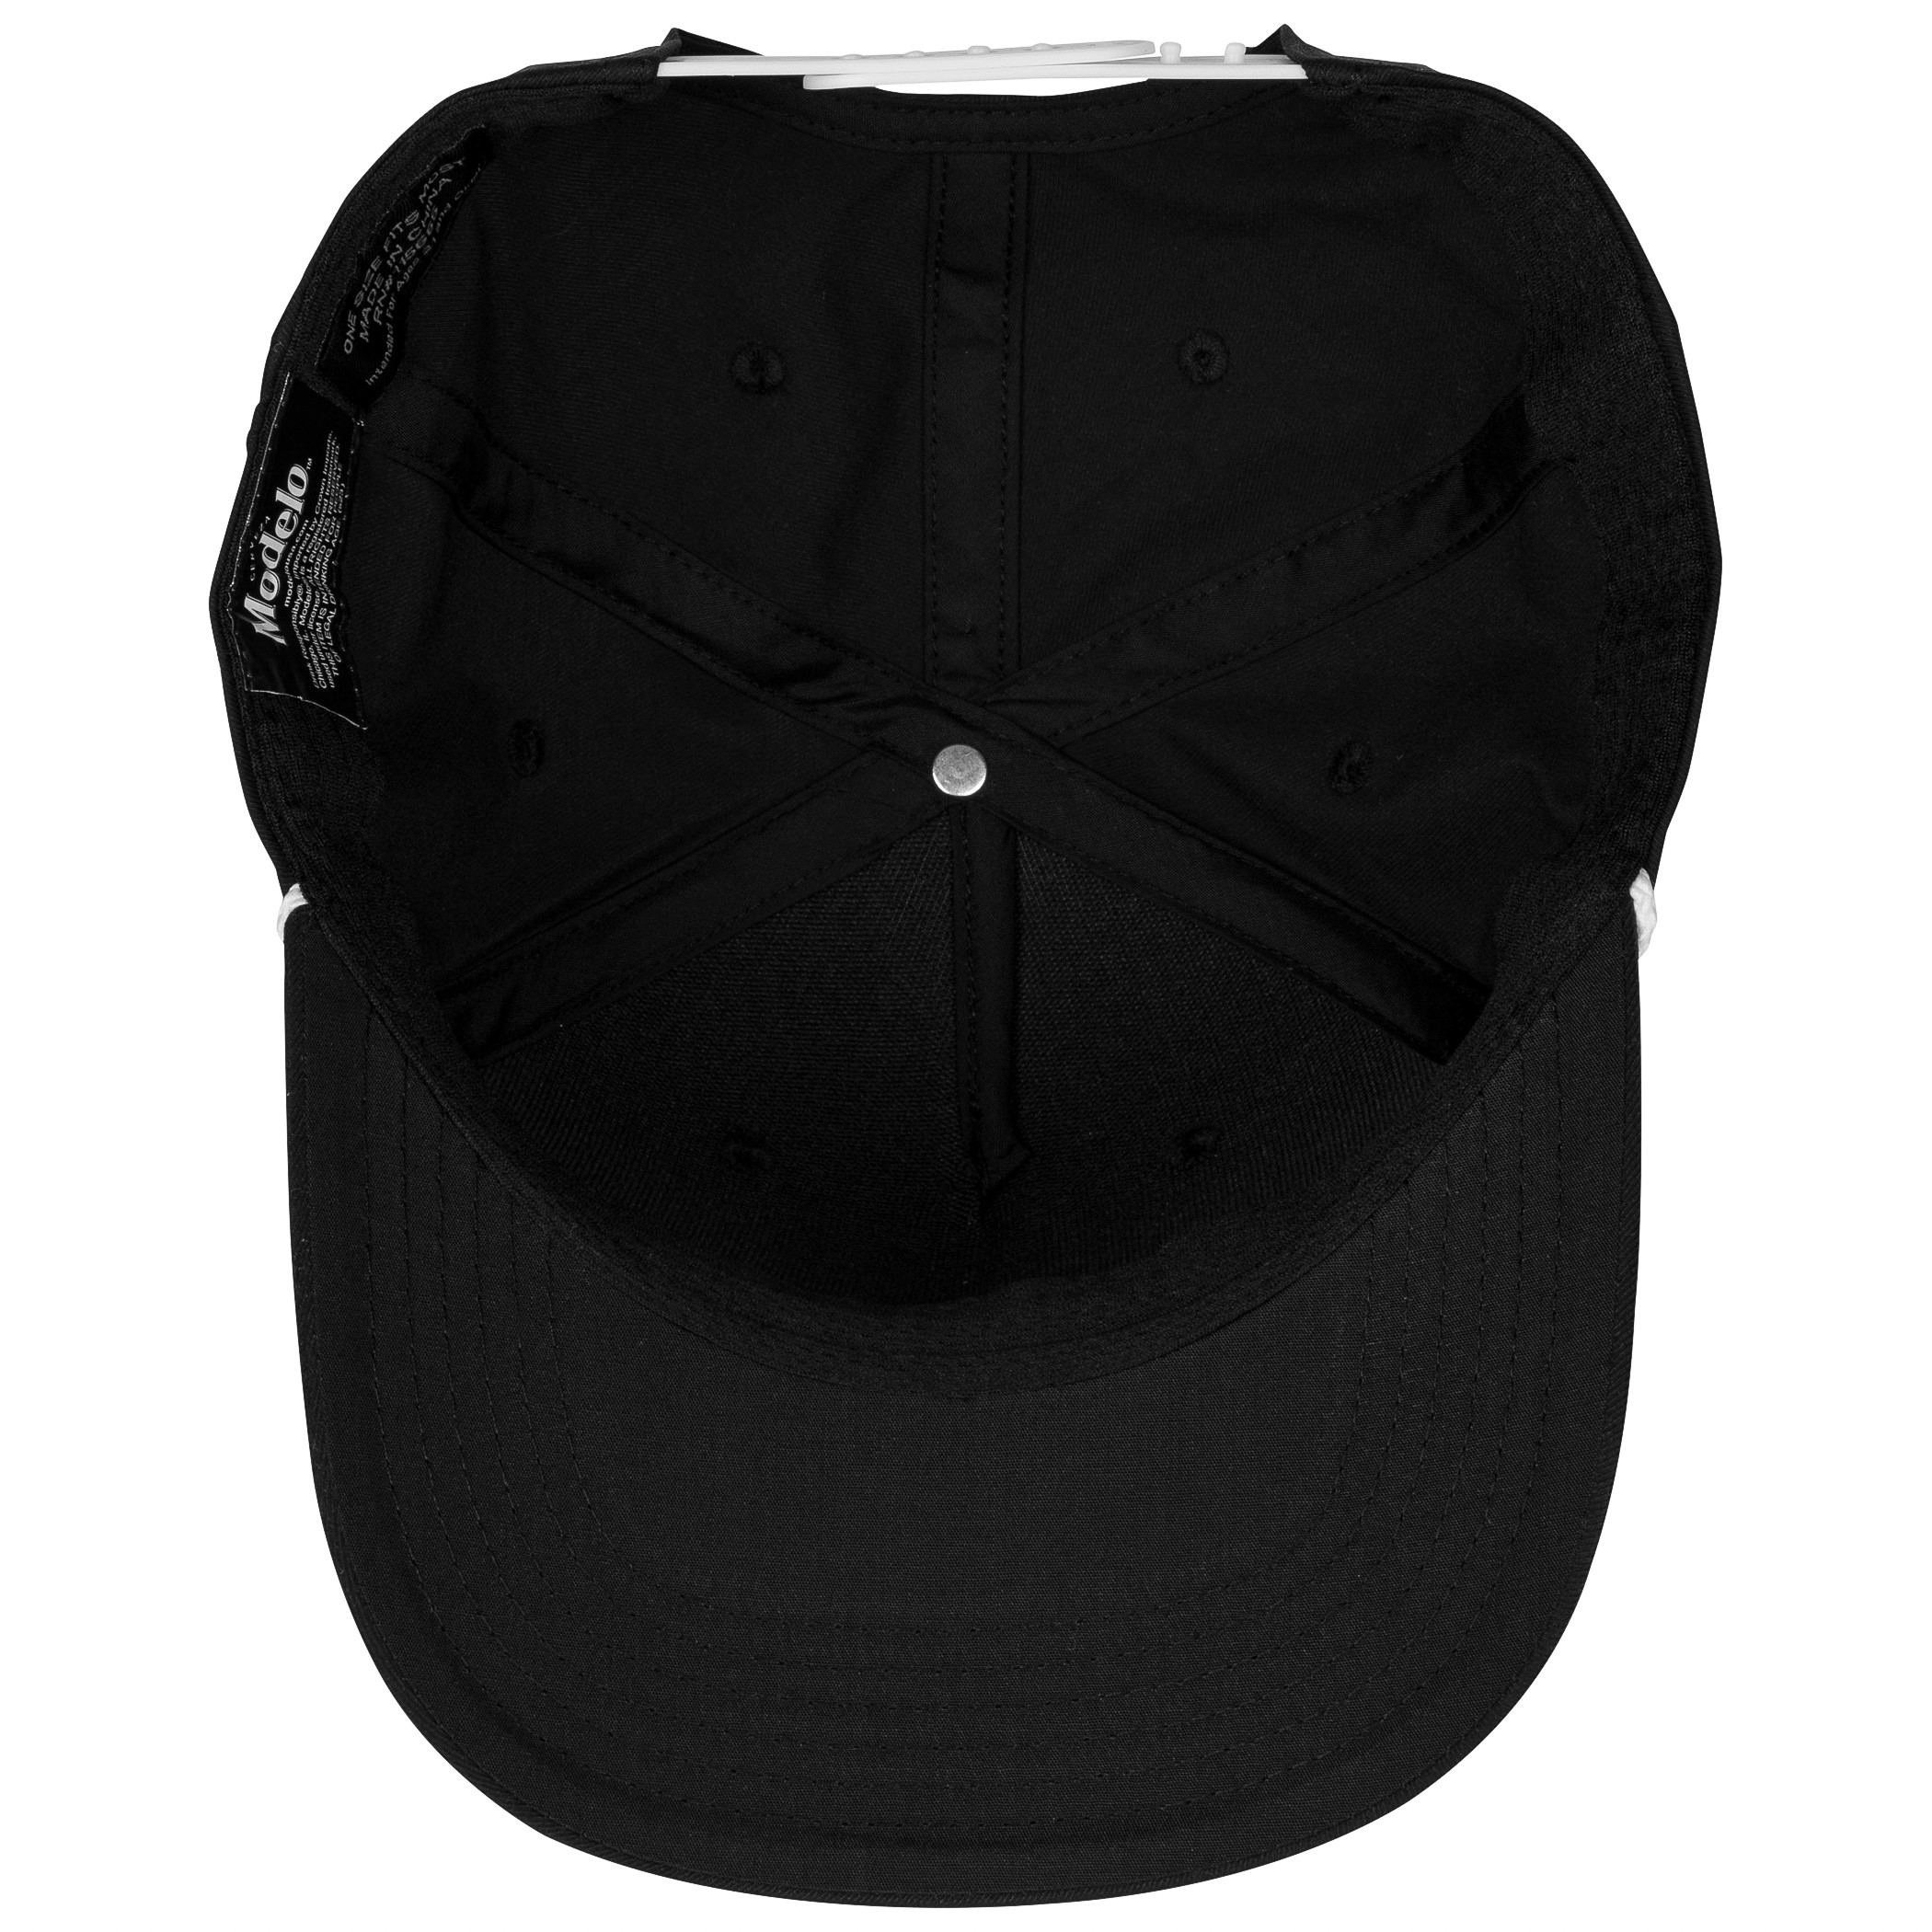 Modelo Especial Monochrome Snapback Rope Hat